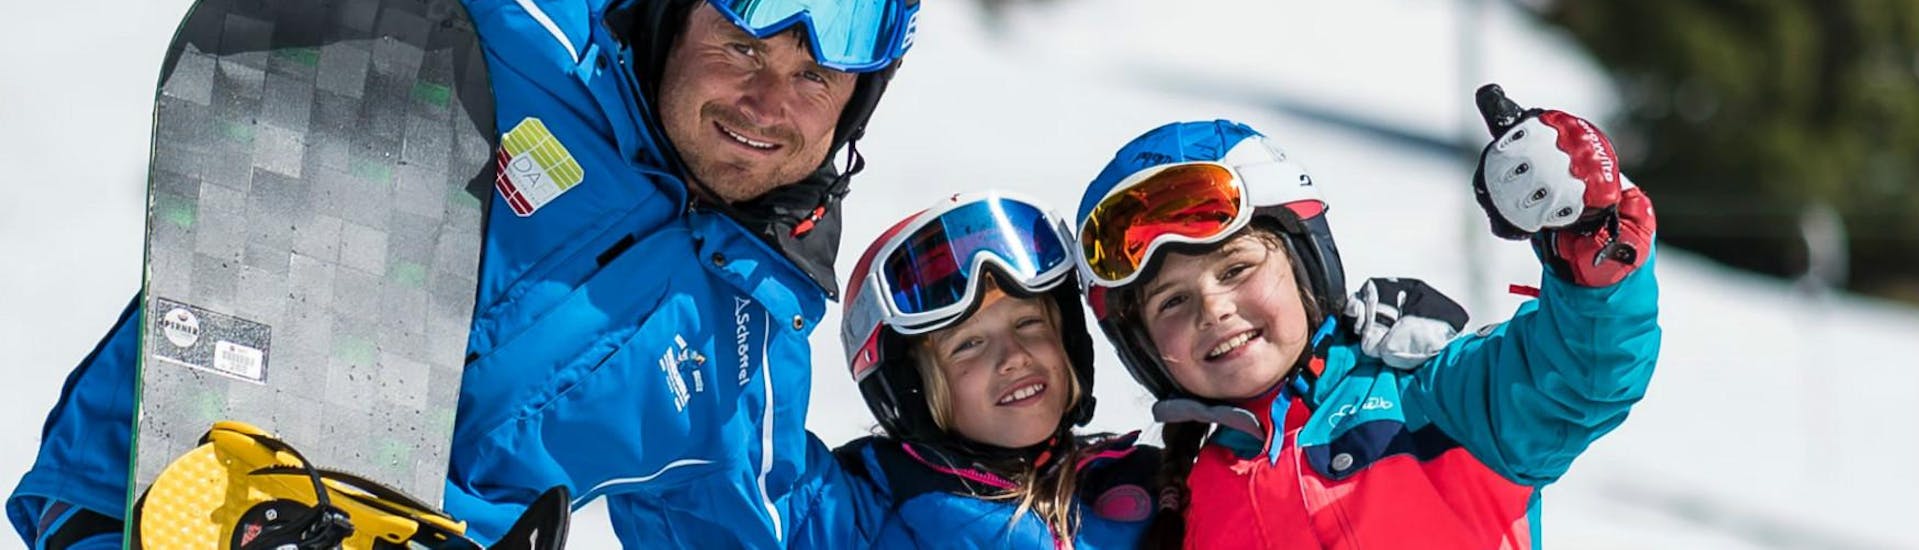 Snowboardkurs für Kinder (8-15 J.) "All Inclusive".